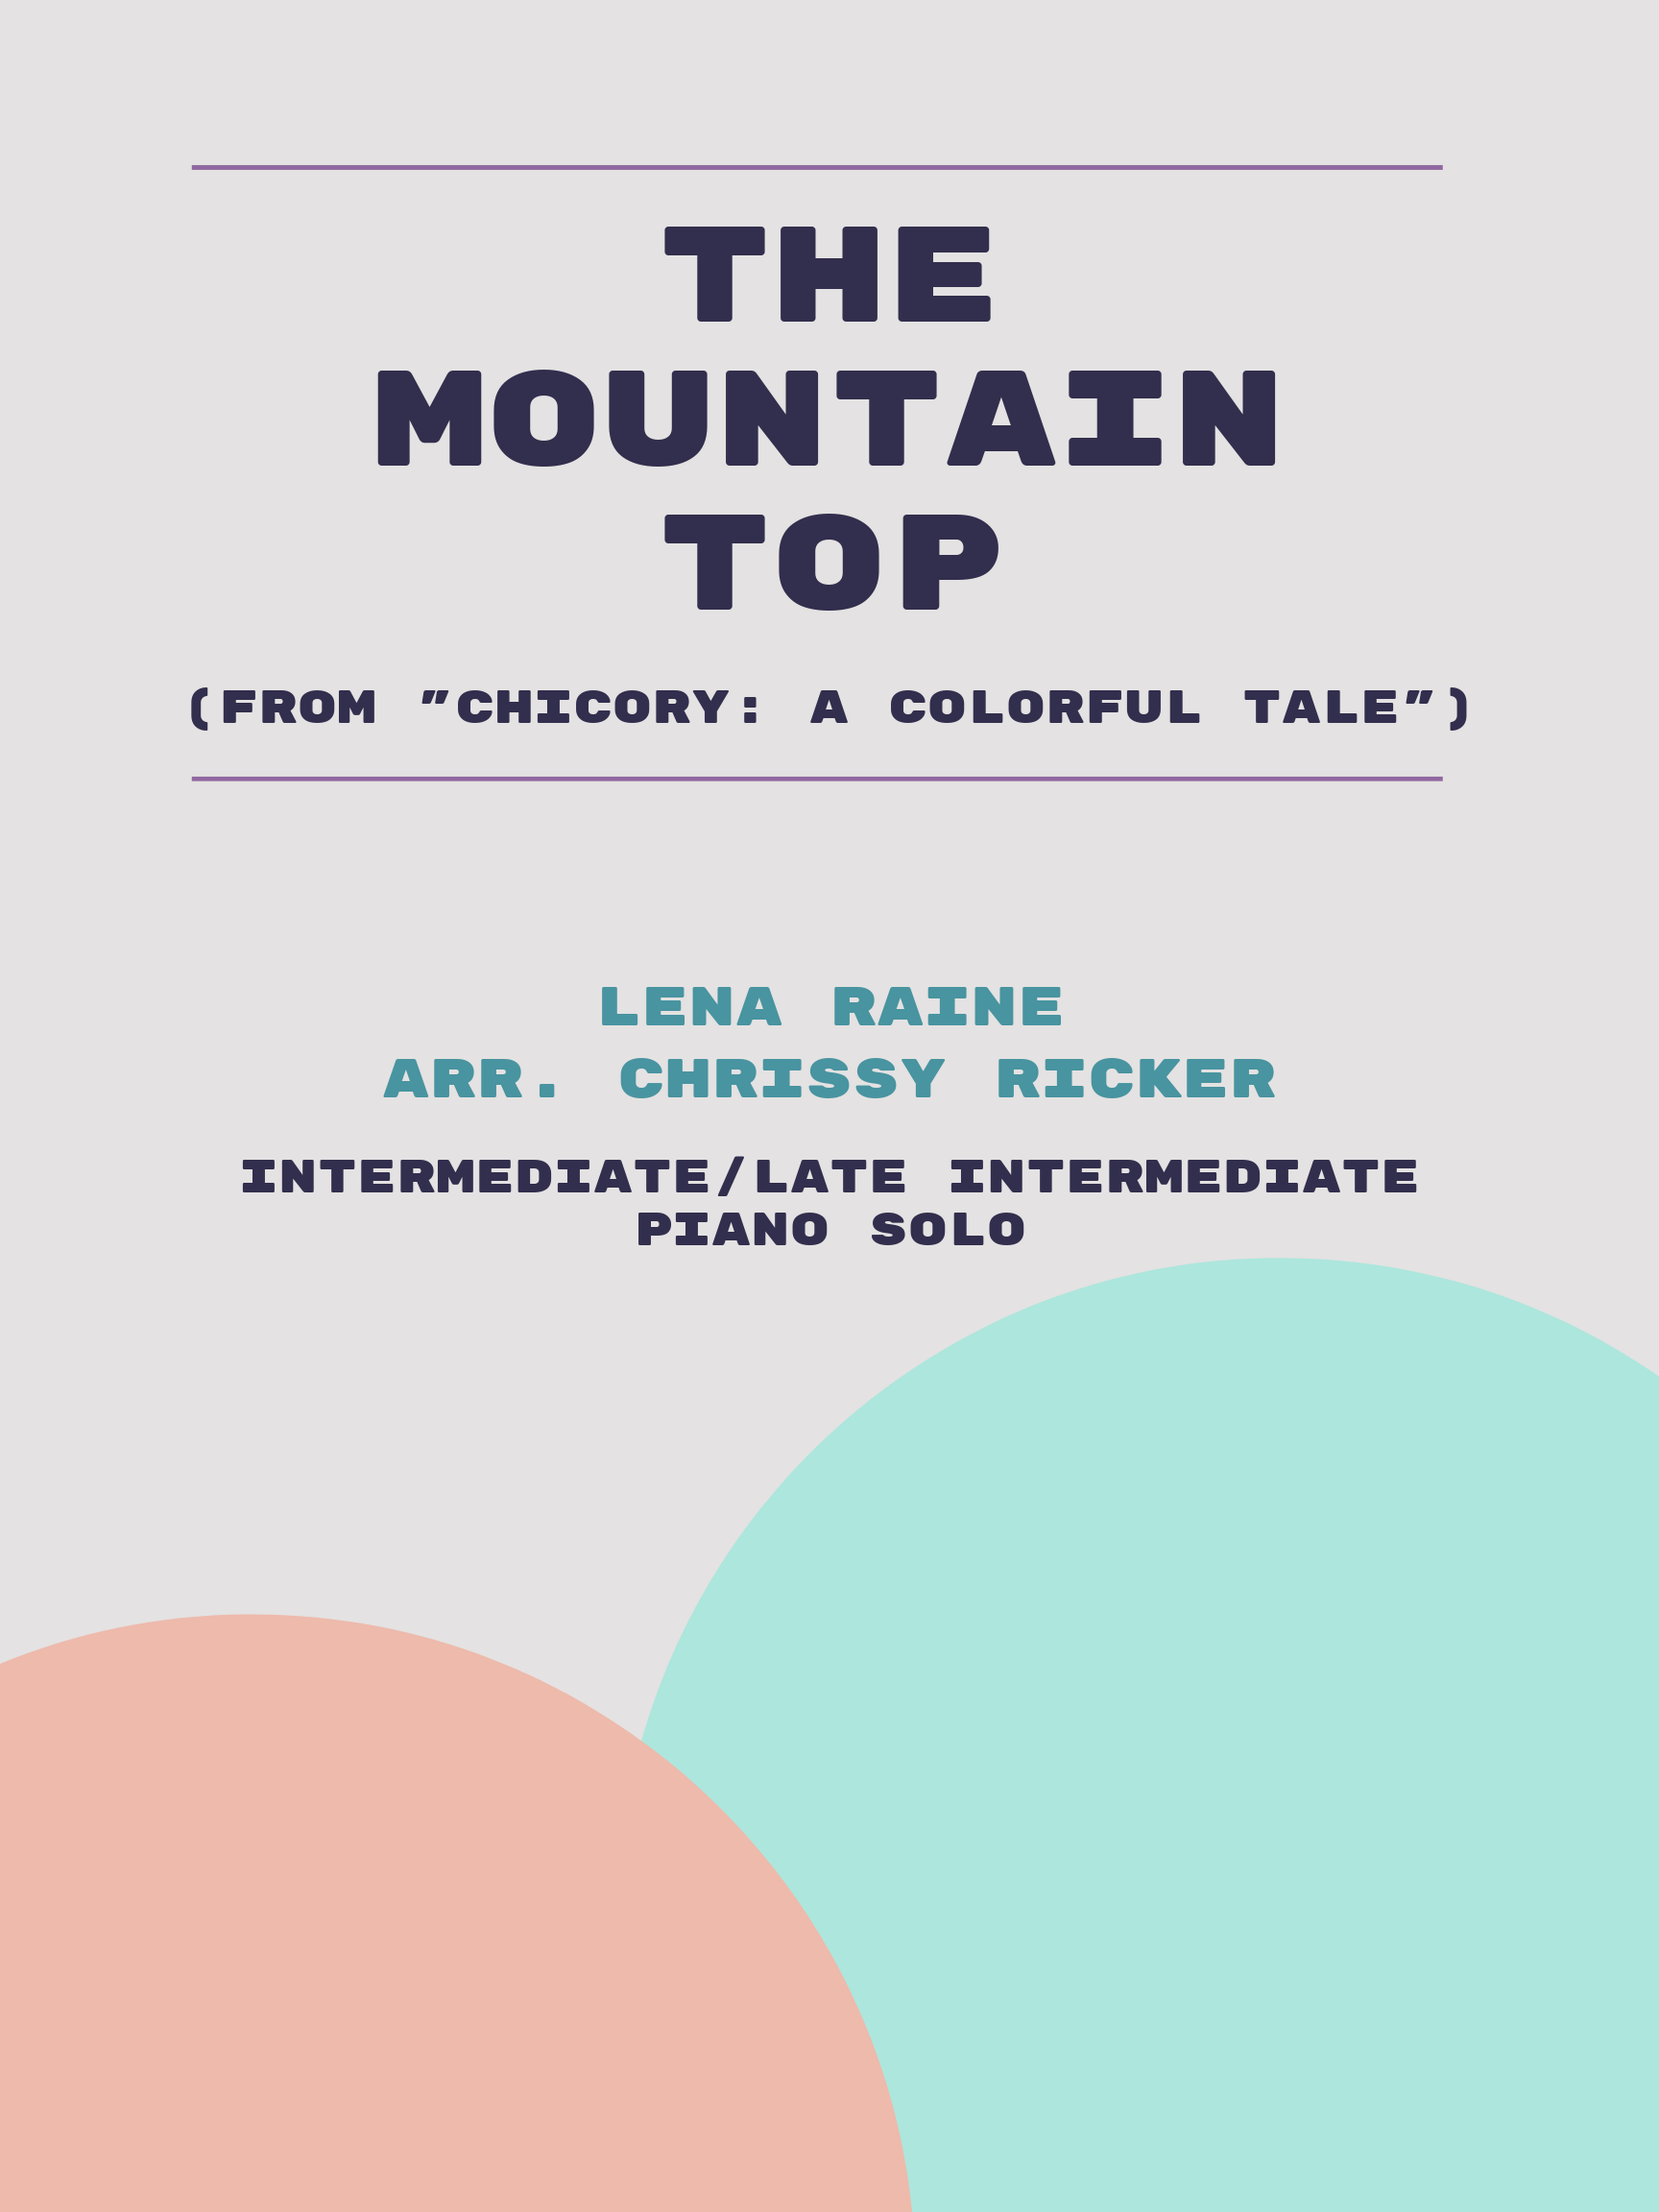 The Mountain Top by Lena Raine